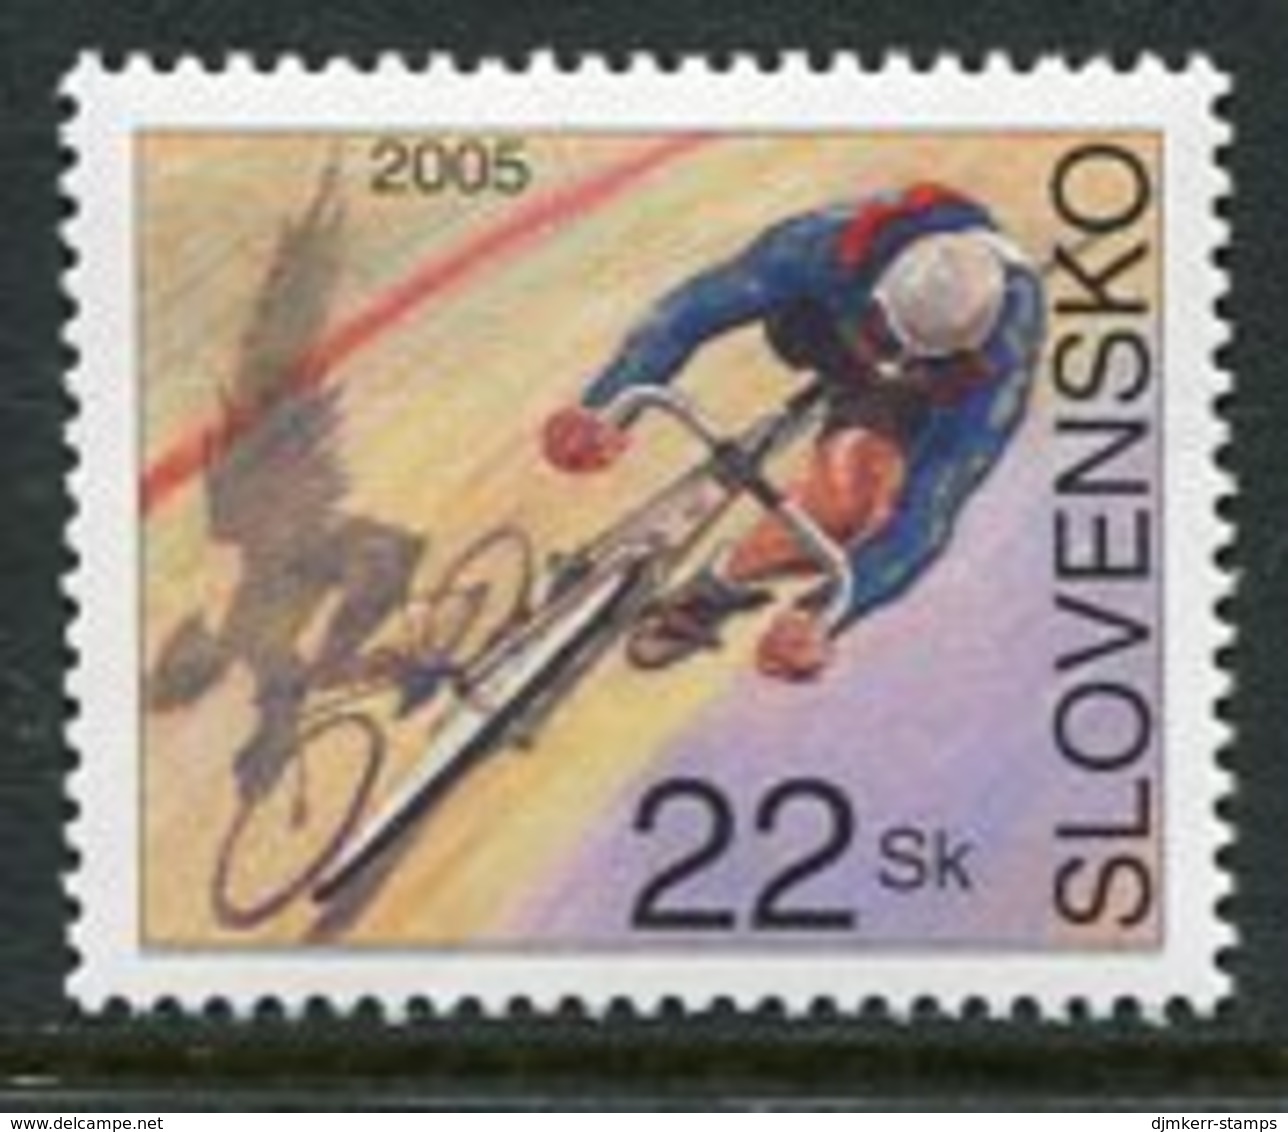 SLOVAKIA 2005 Paralympic Cycle Racing Medallist  MNH / **.  Michel 511 - Nuevos